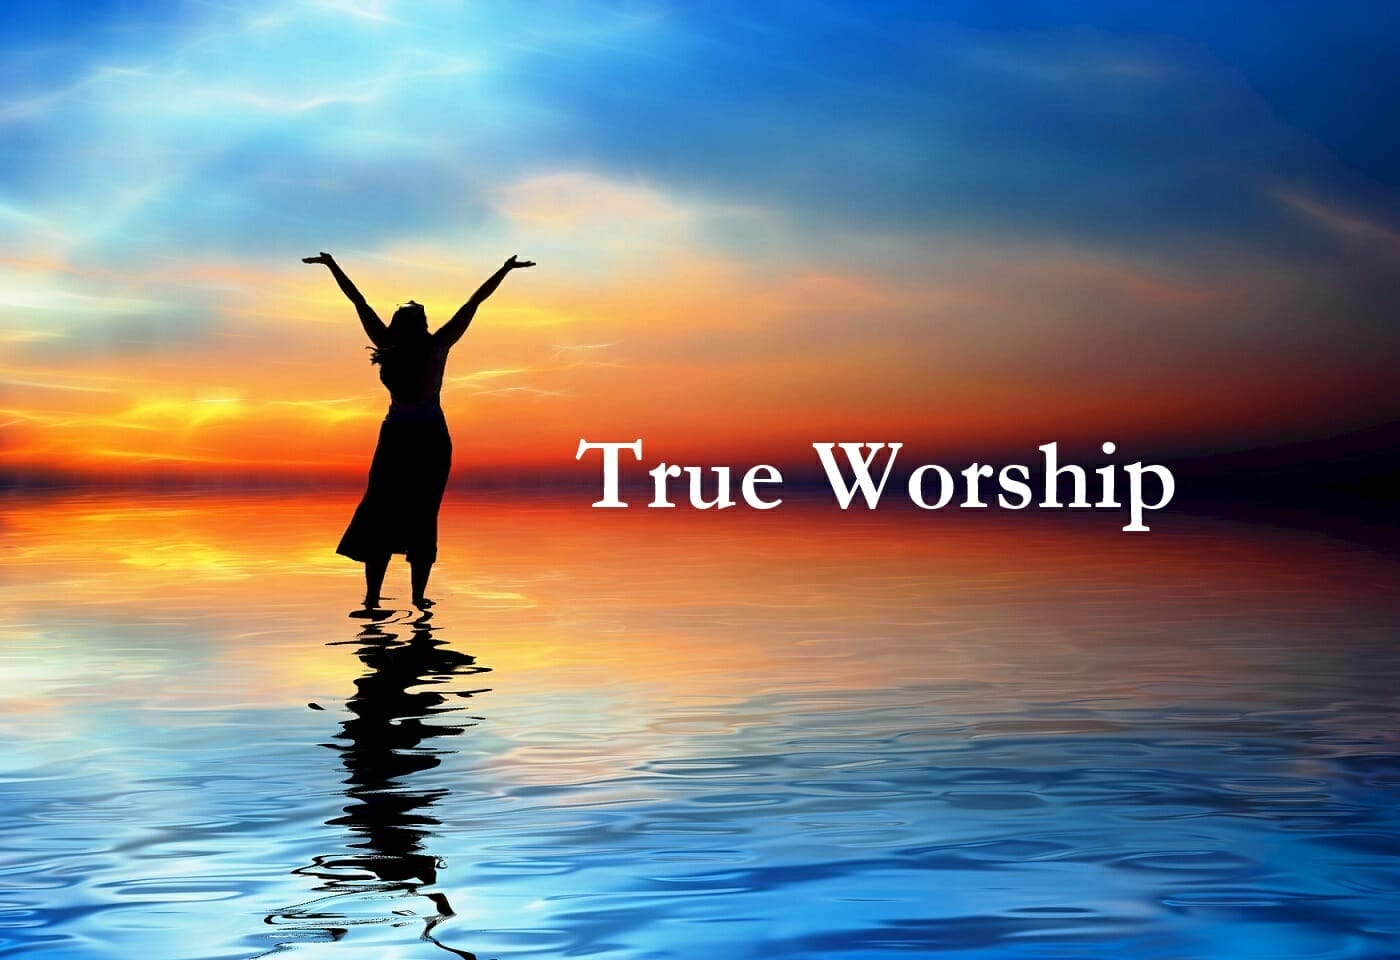 what is true worship of god, true worship, worship in the bible, true worship in the bible, bible worship, worship god, true worship of god, worship jesus christ